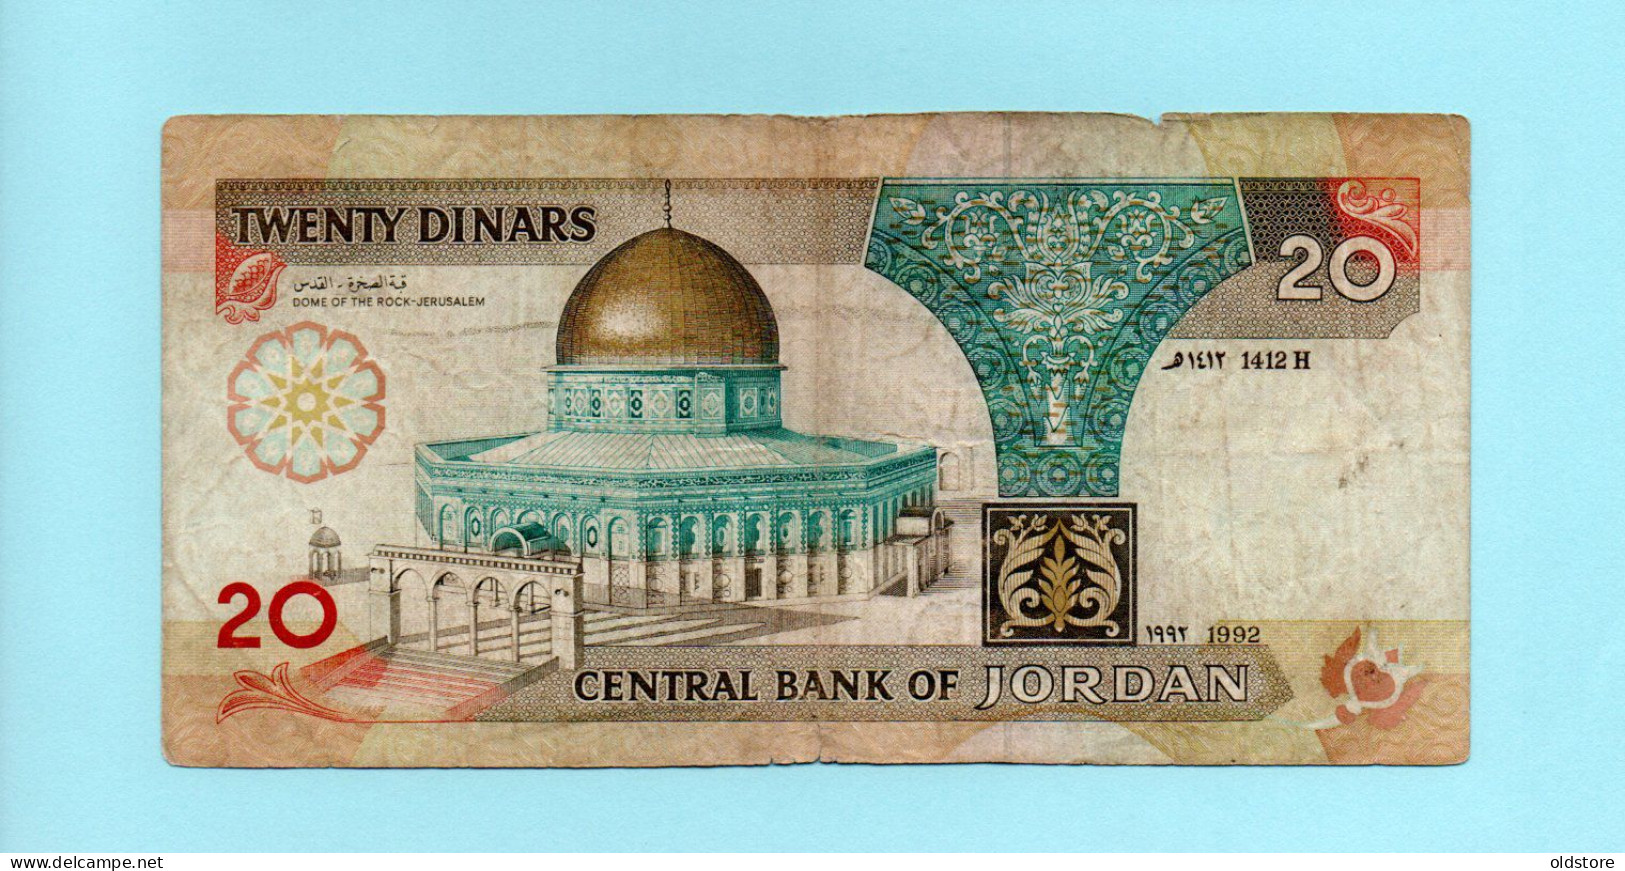 Jordan Banknote 20 Dinars ND 1992 - VG Condition Please See The Description - No3 - Jordanie